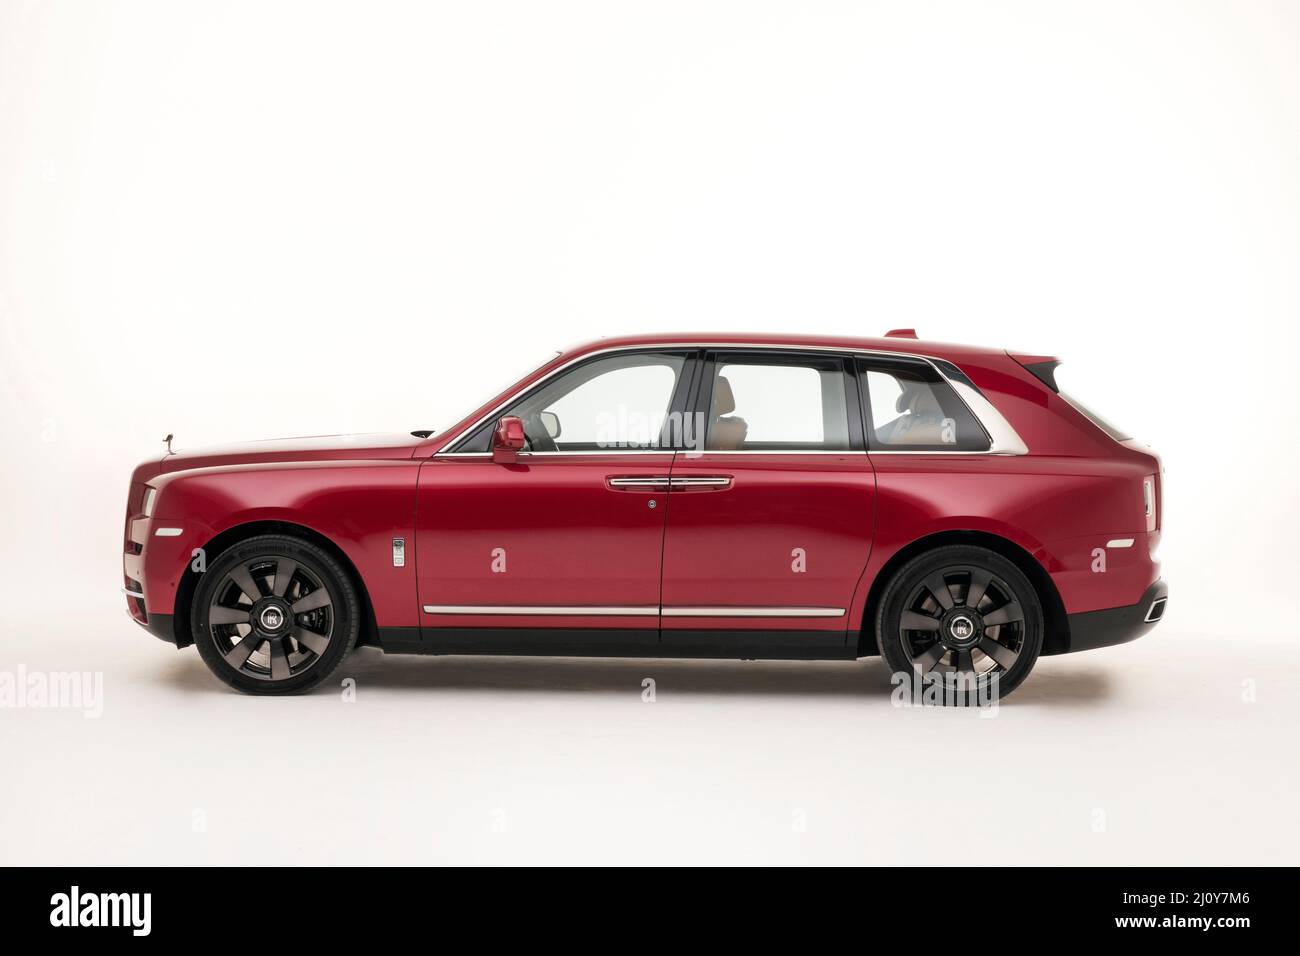 Rolls Royce Cullinan SUV 2018 Stock Photo